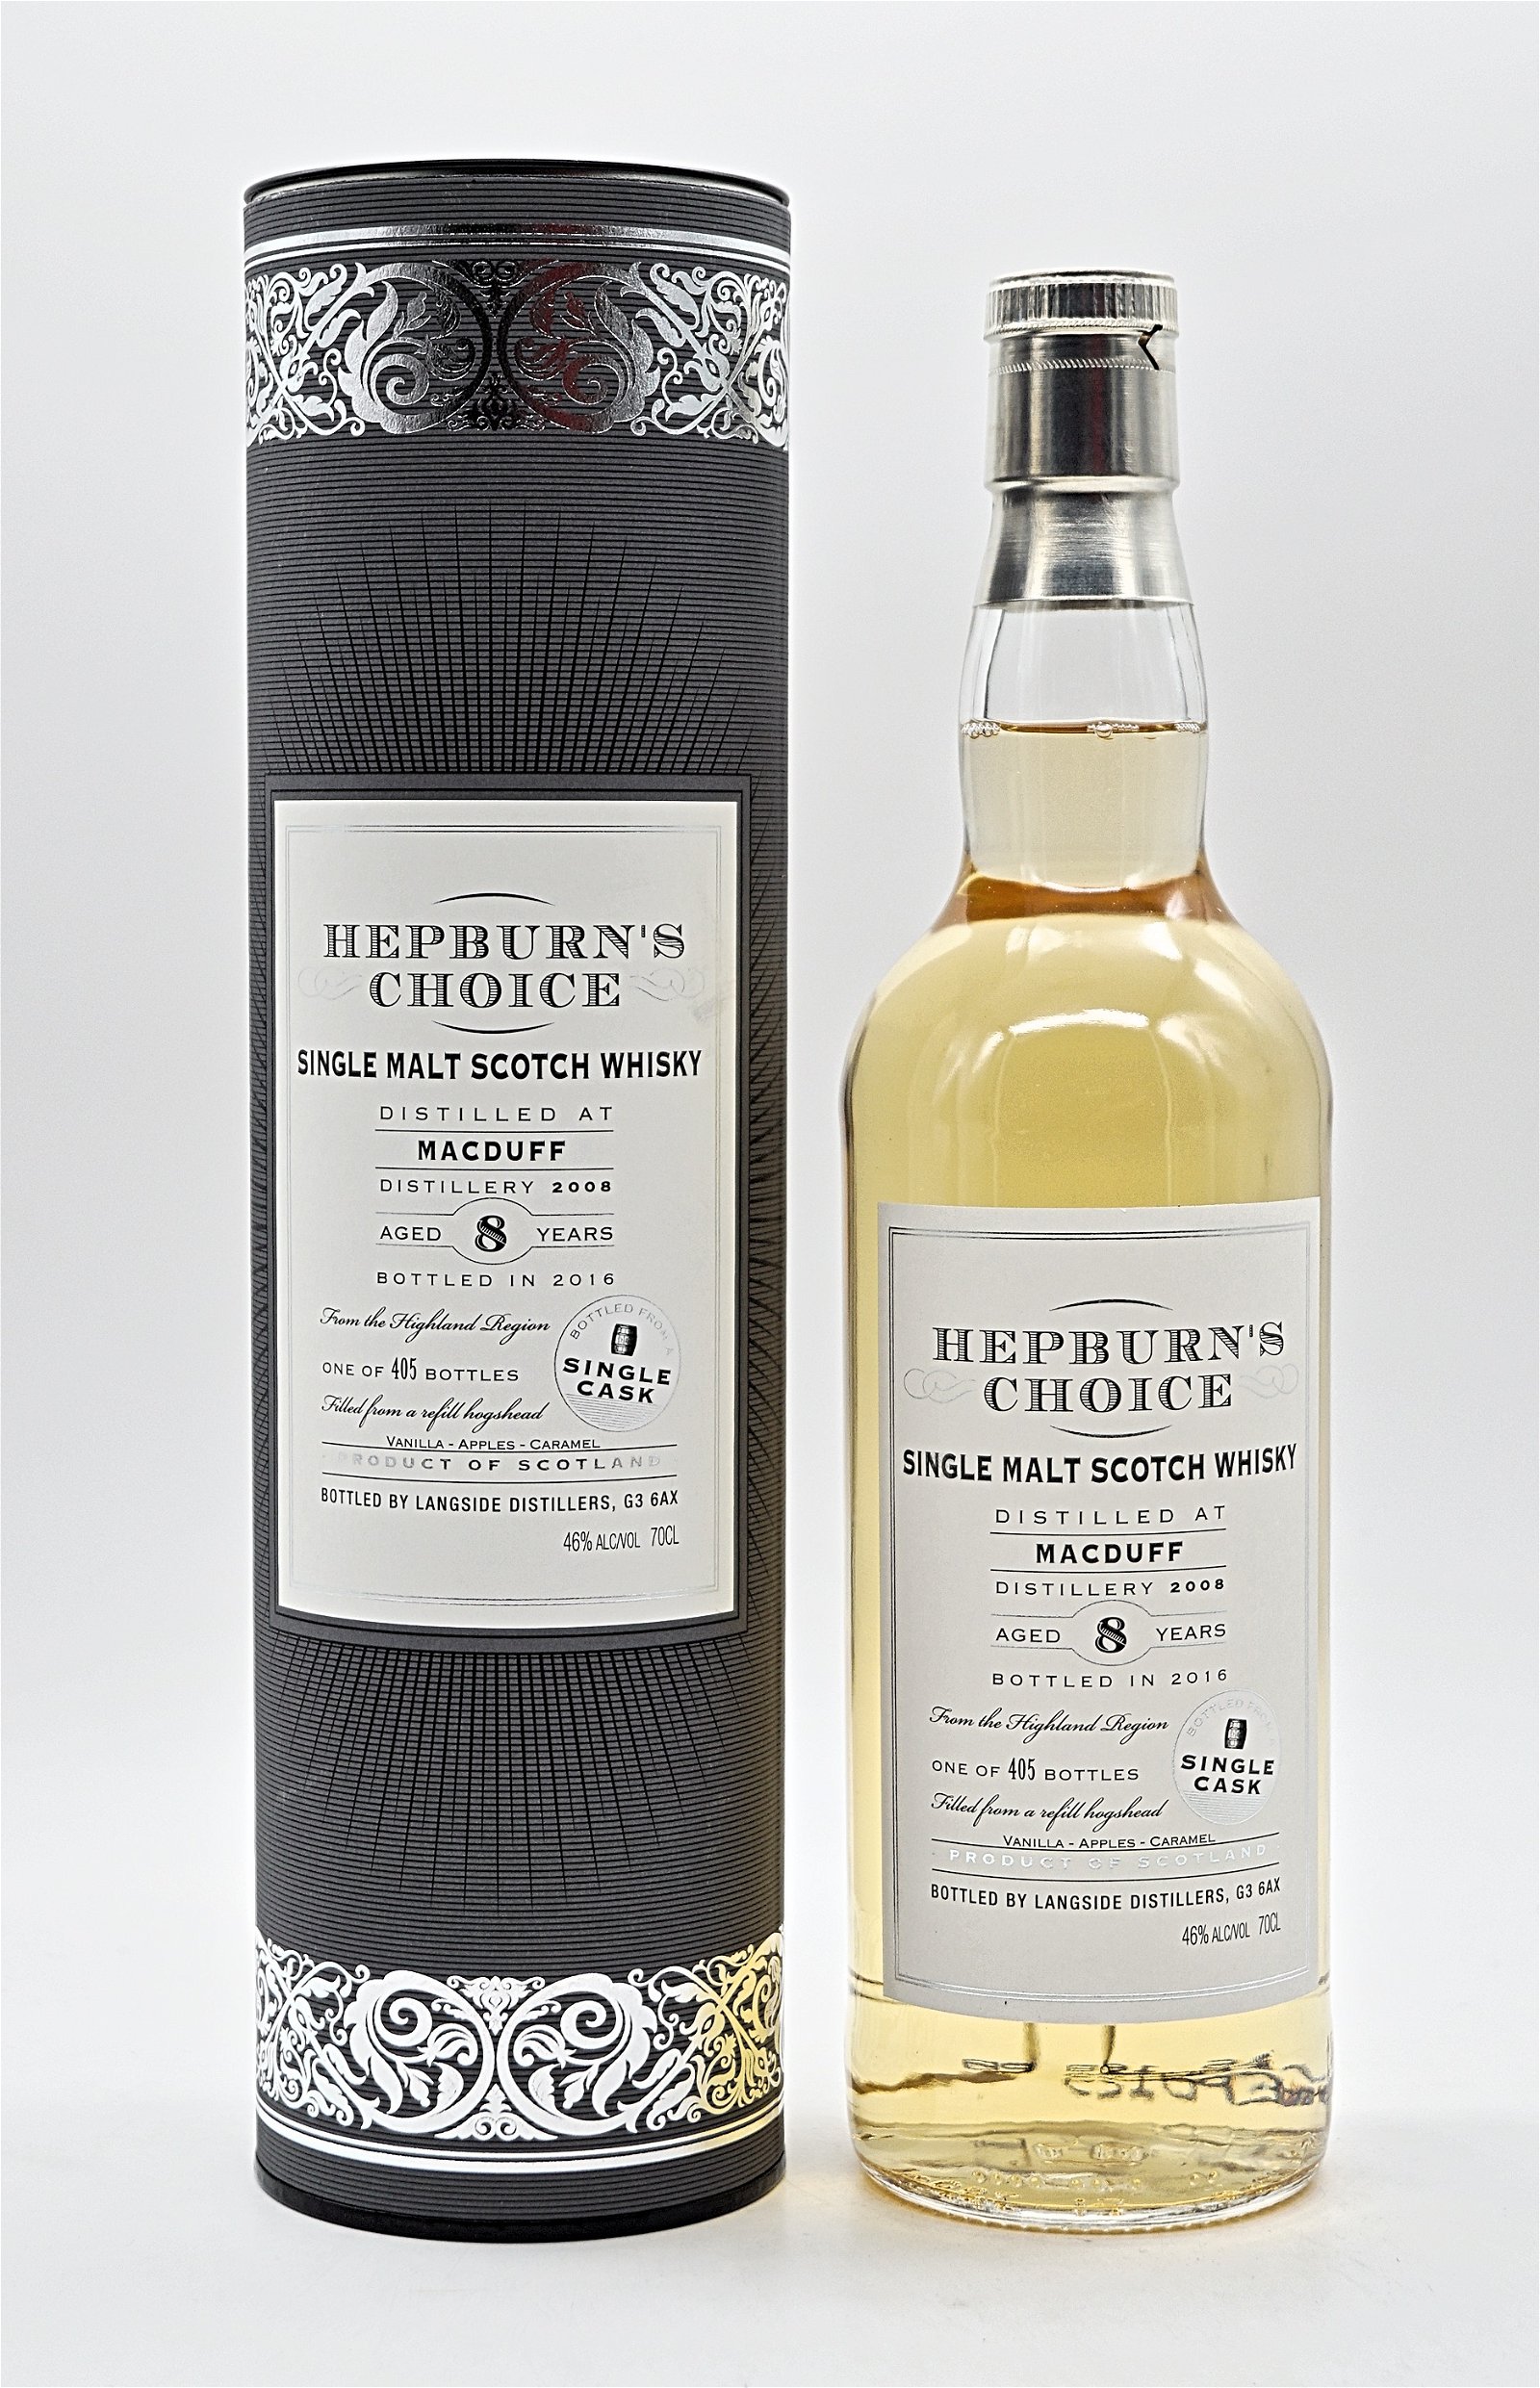 Hepburns Choice Macduff 8 Jahre 2008/2016 - 405 Fl. Single Malt Scotch Whisky